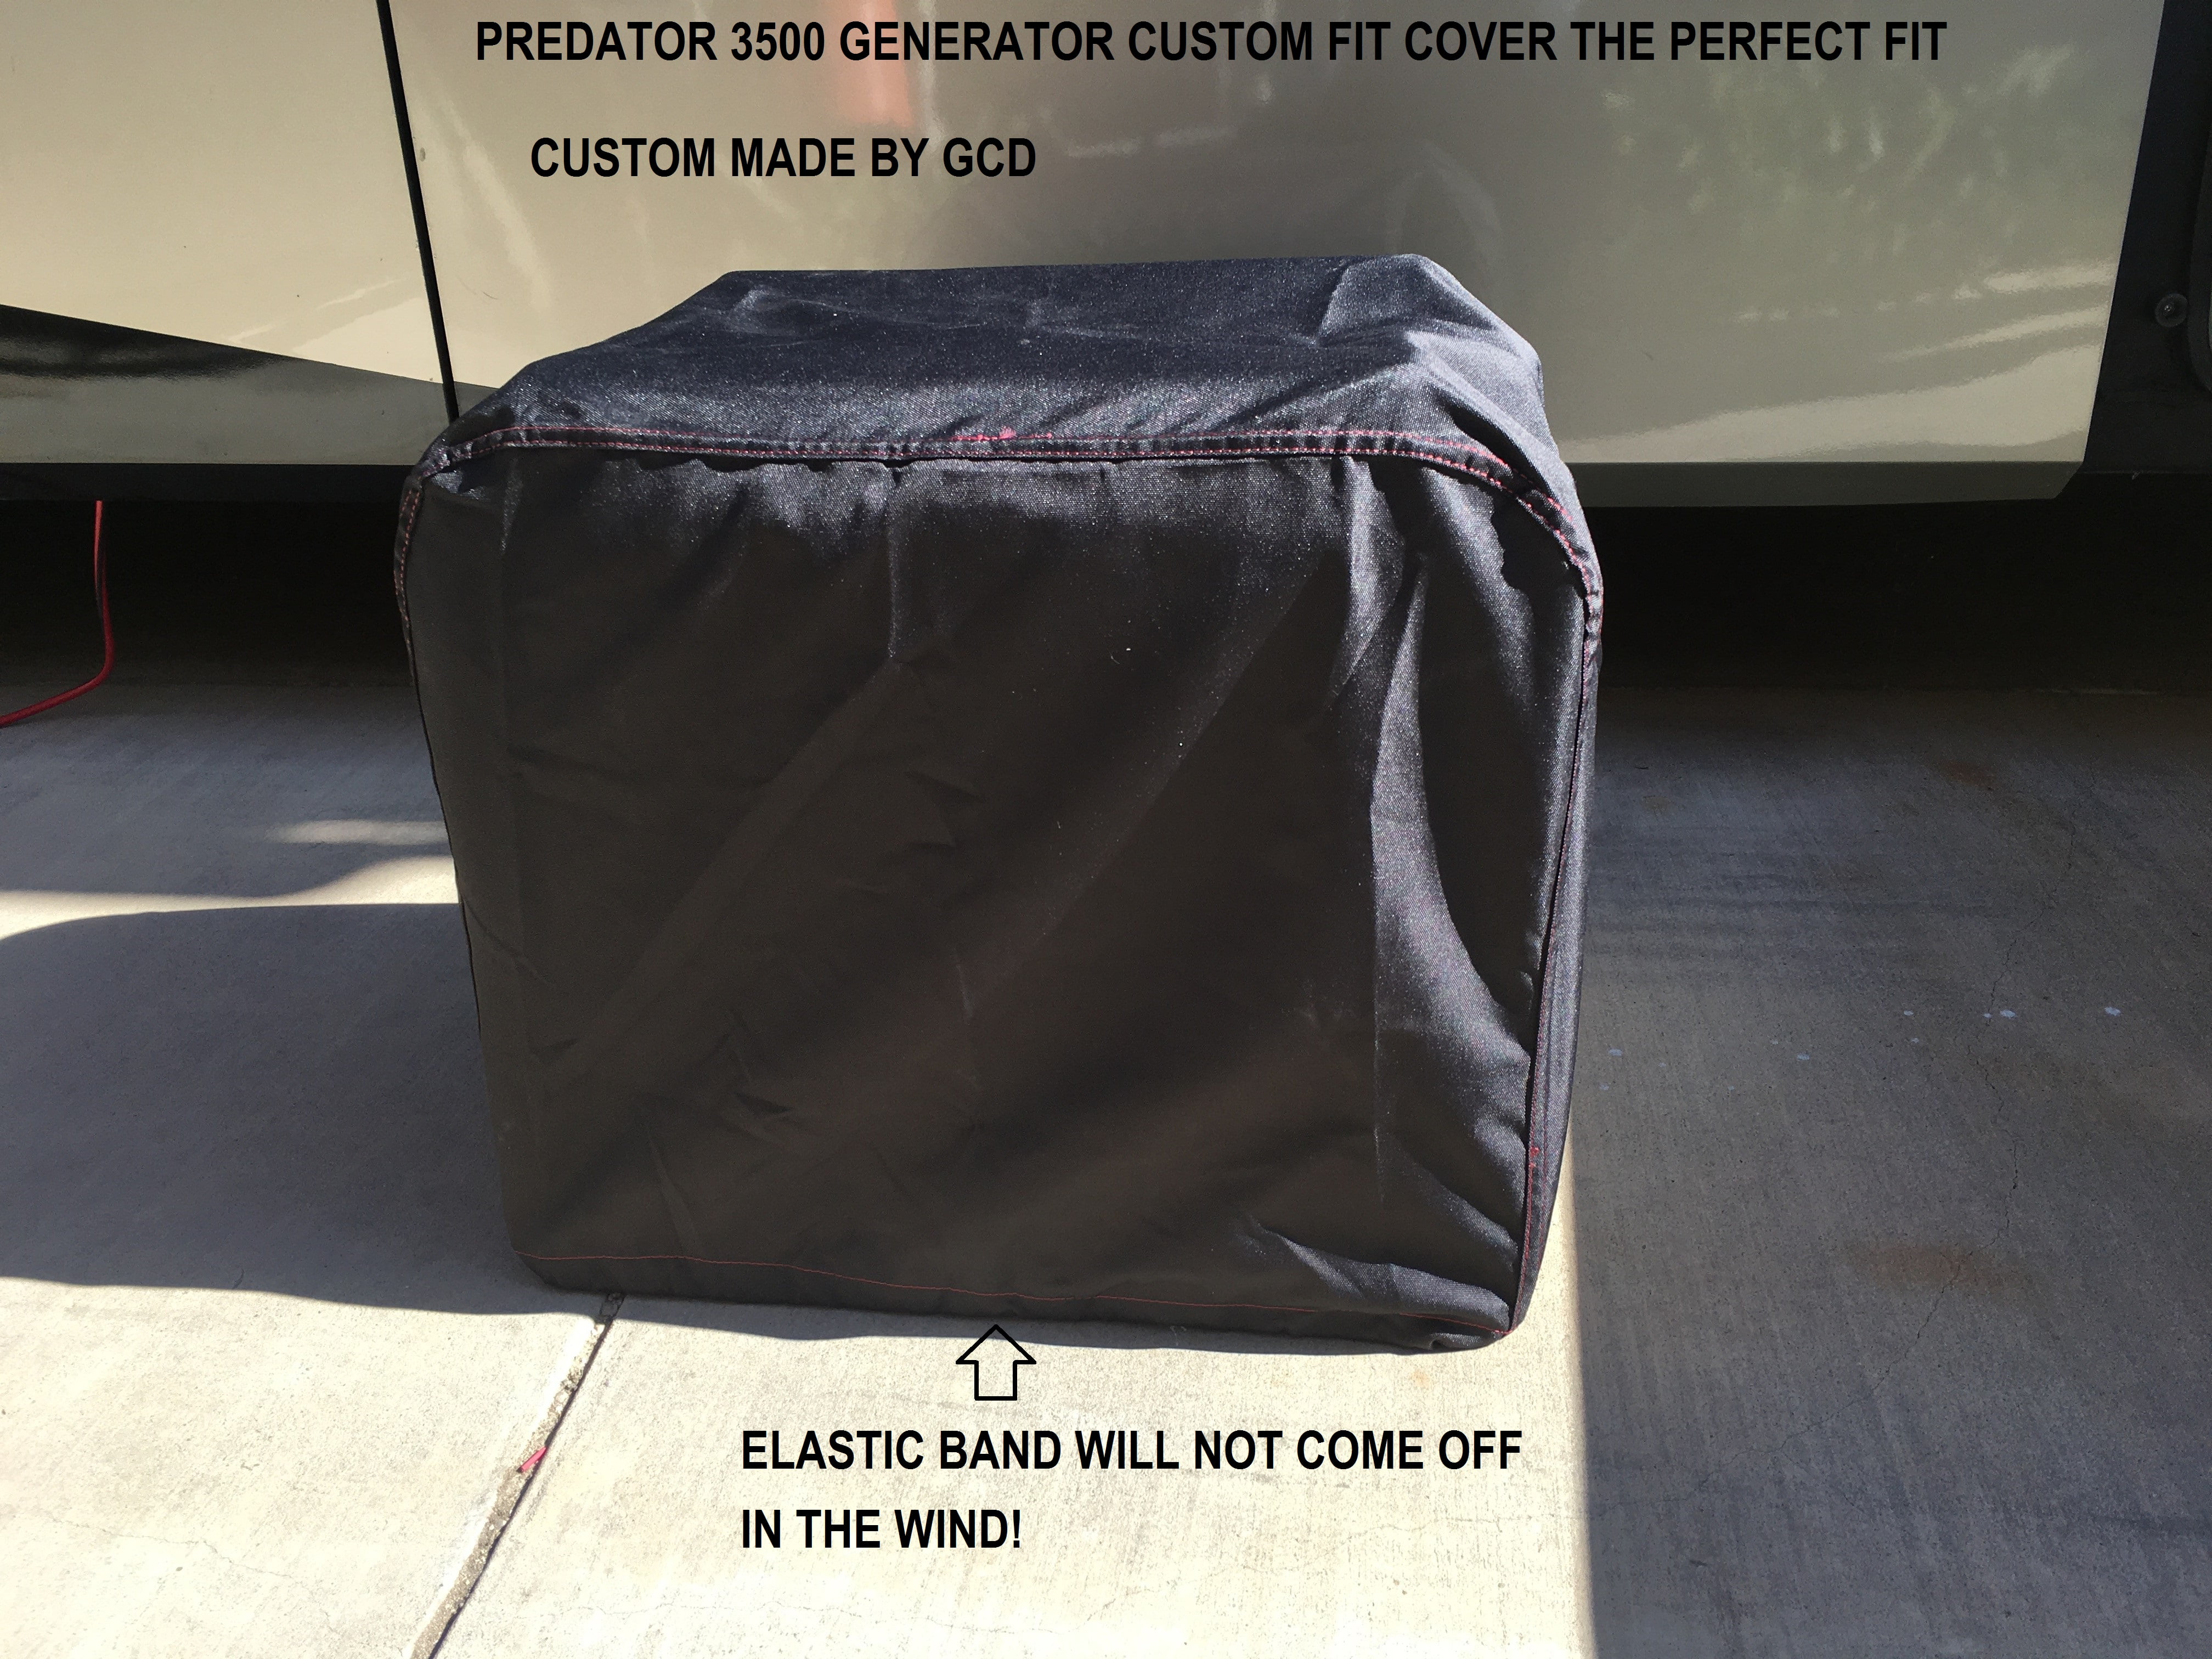 Heavy Duty Waterproof Generator Cover for iGen4500 and Predator 3500 